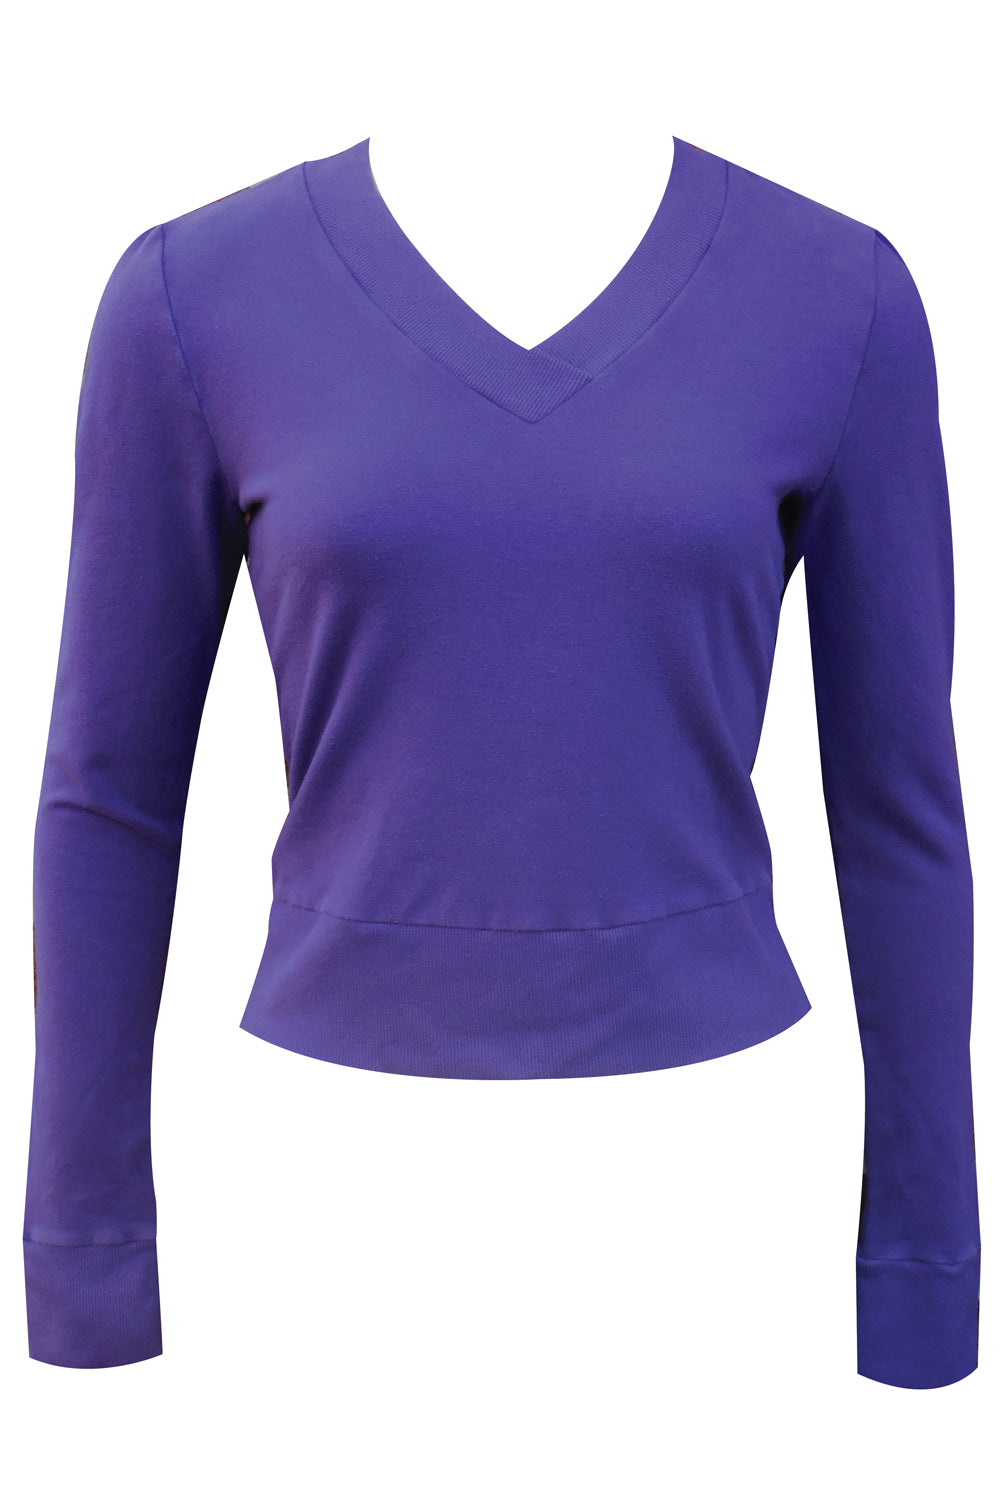 Purple v-neck French terry shirt with rib trim